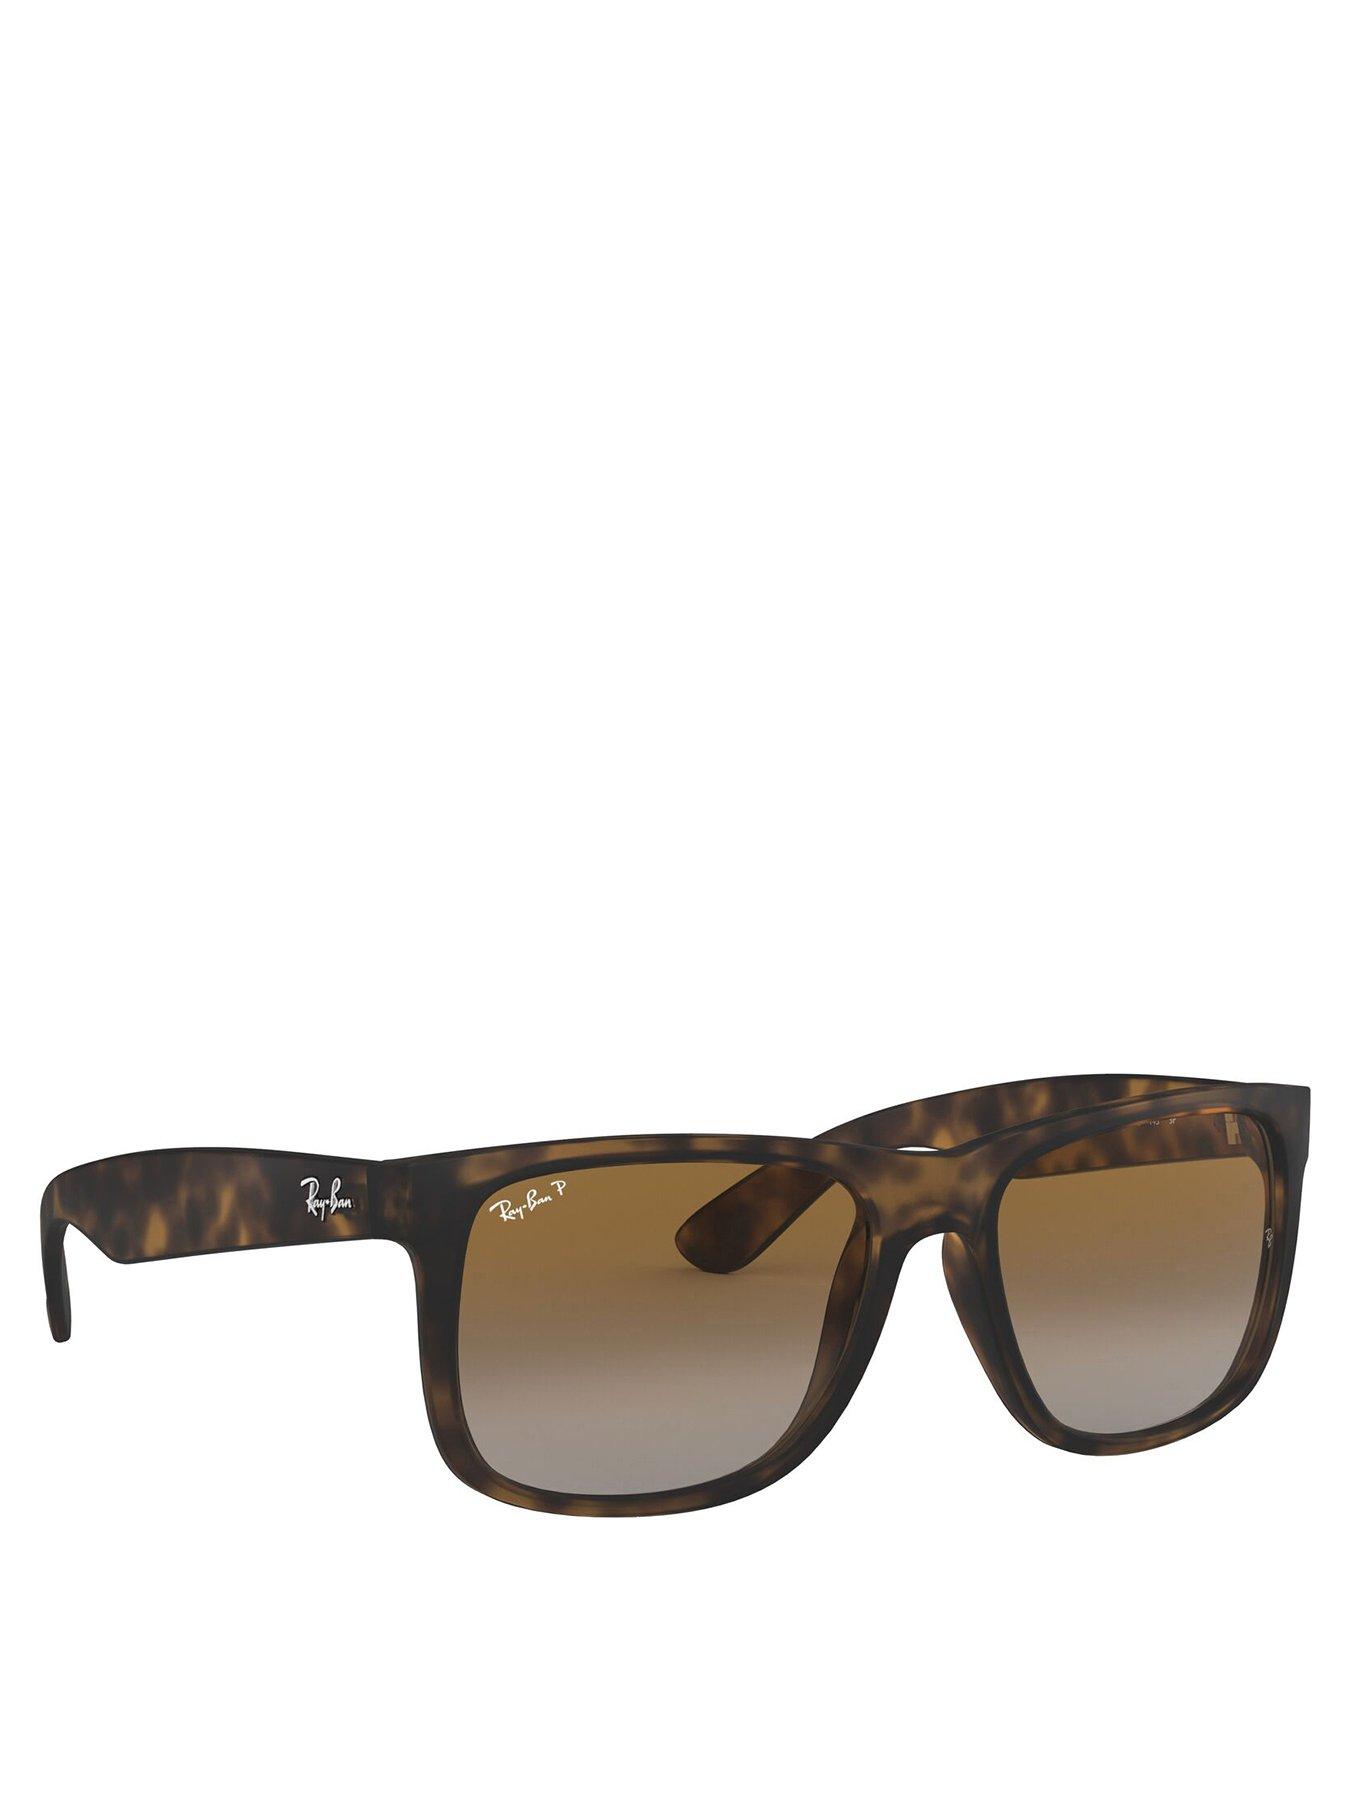 Ray-Ban Square Frame Lens Sunglasses - Tortoise 